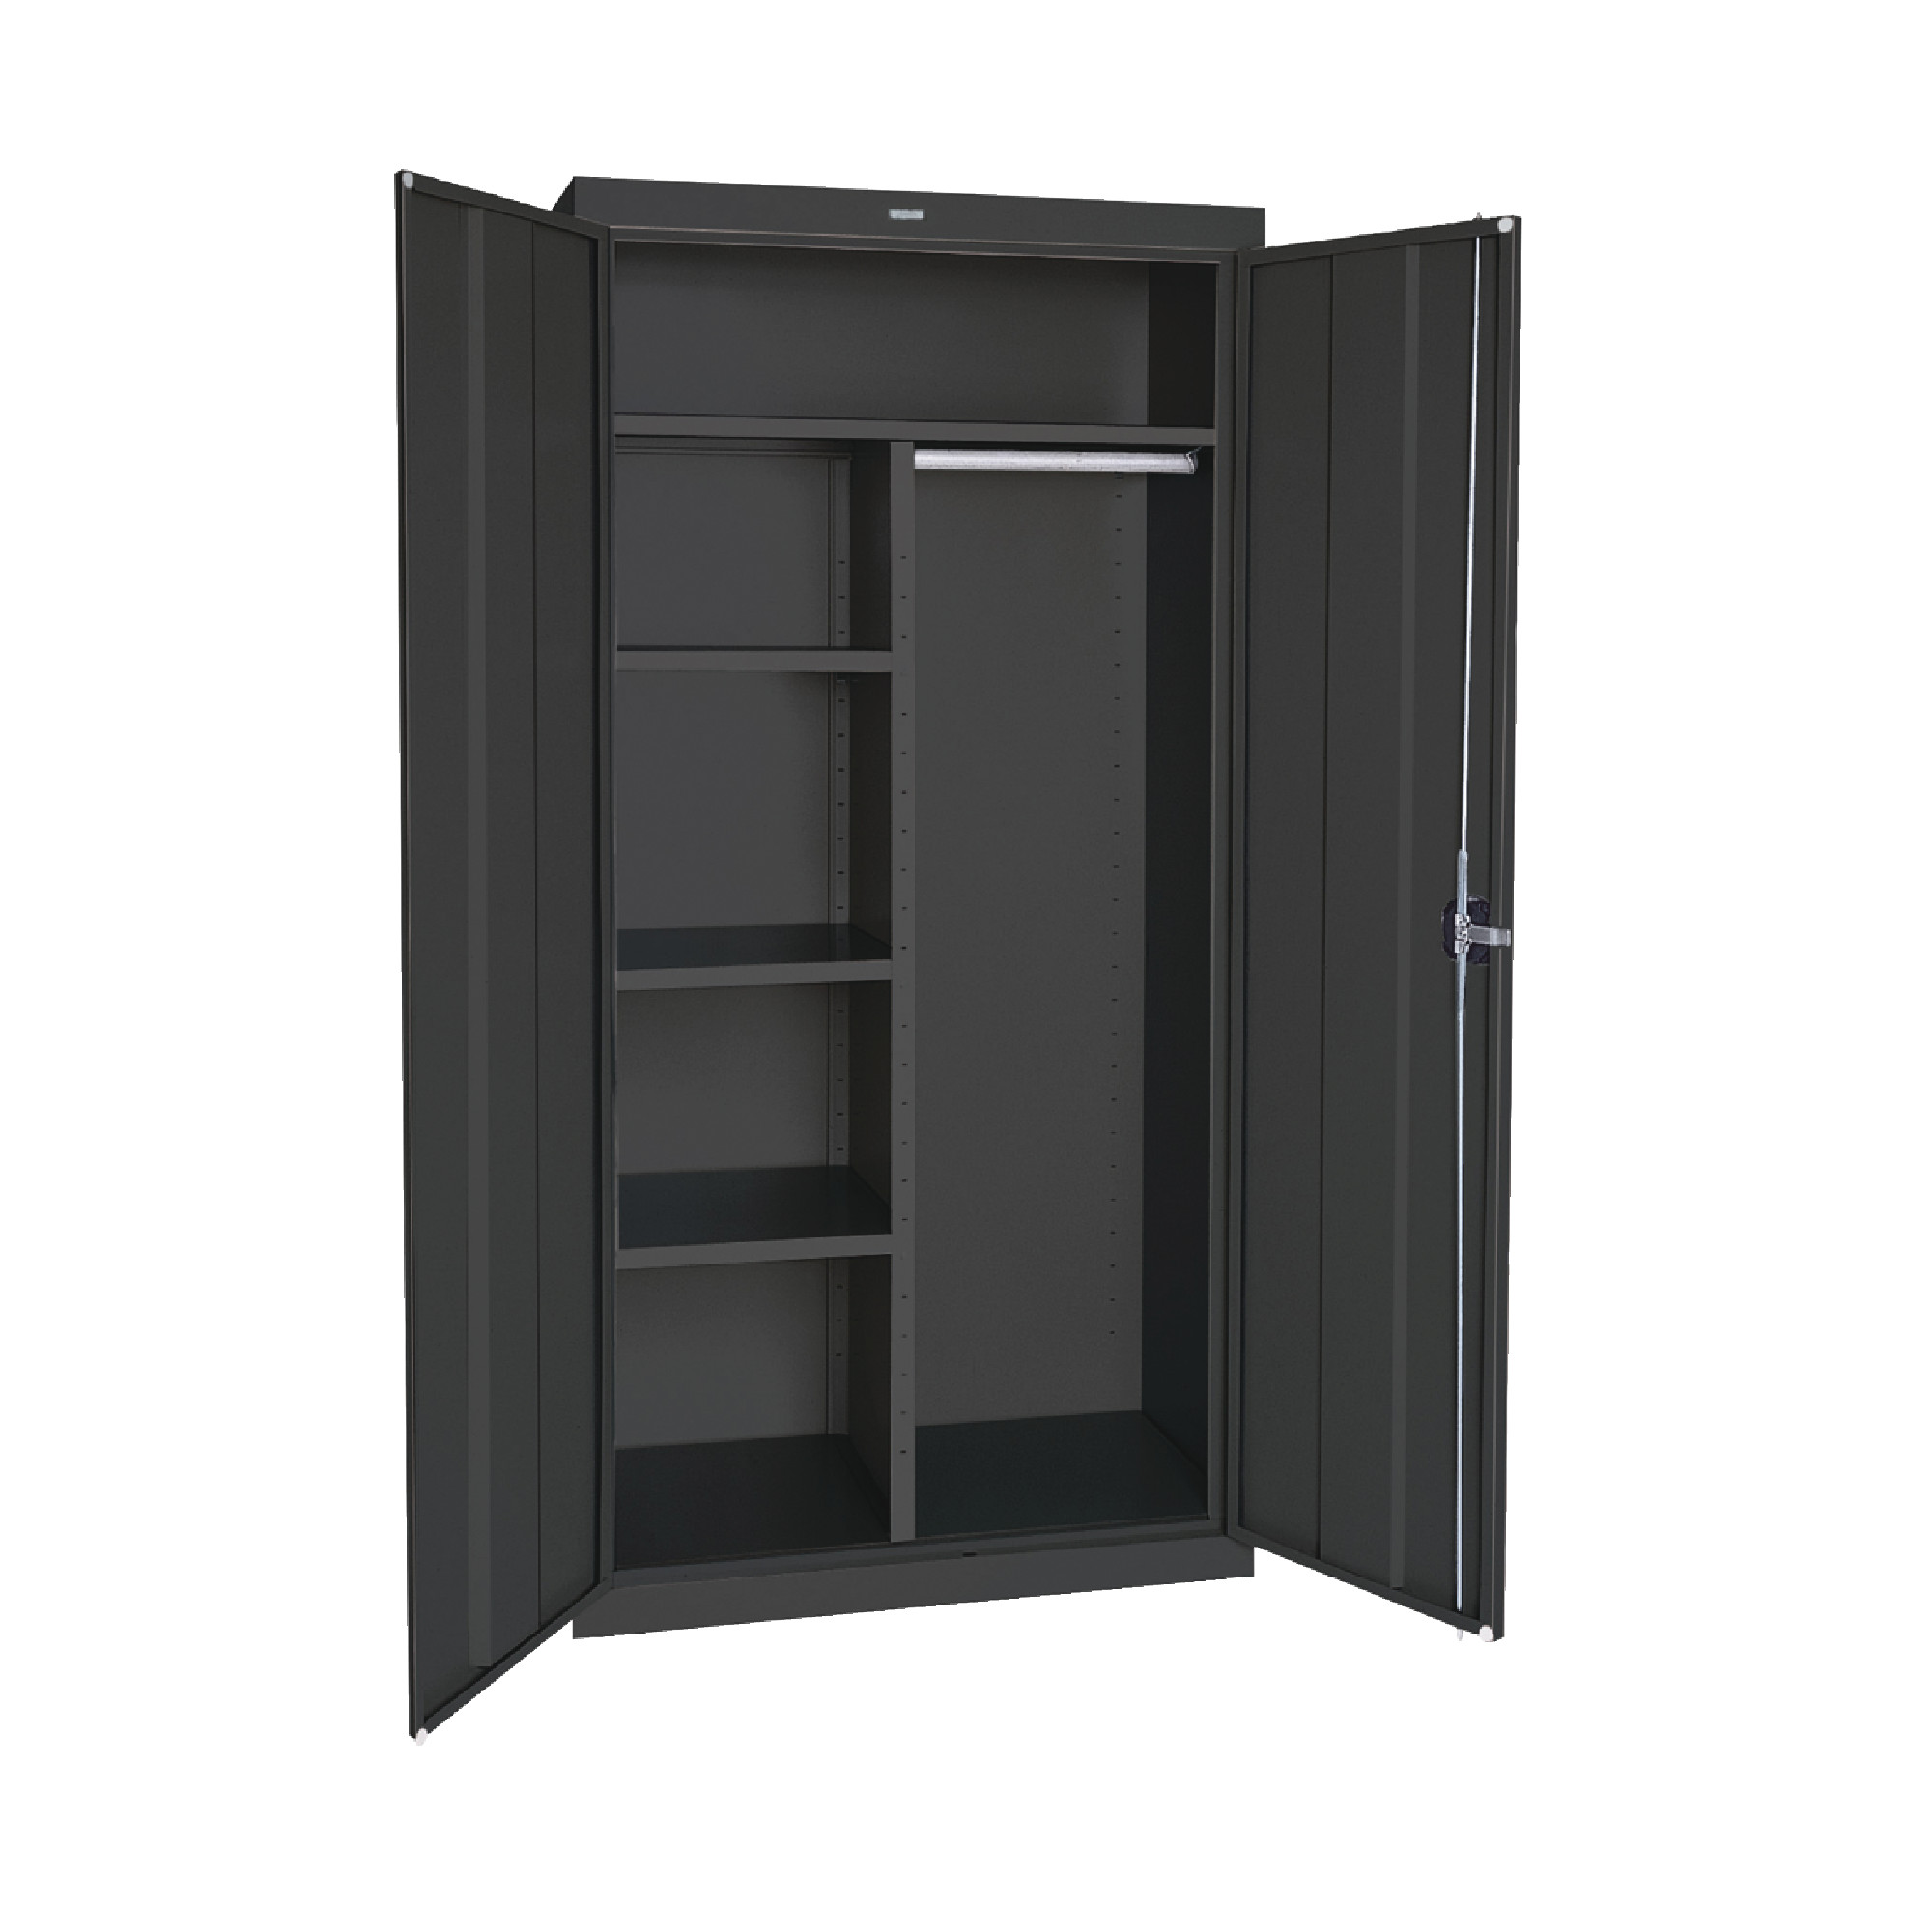 SANDUSKY 46"W x 24"D x 72"H Floor Combination Cabinet - Black